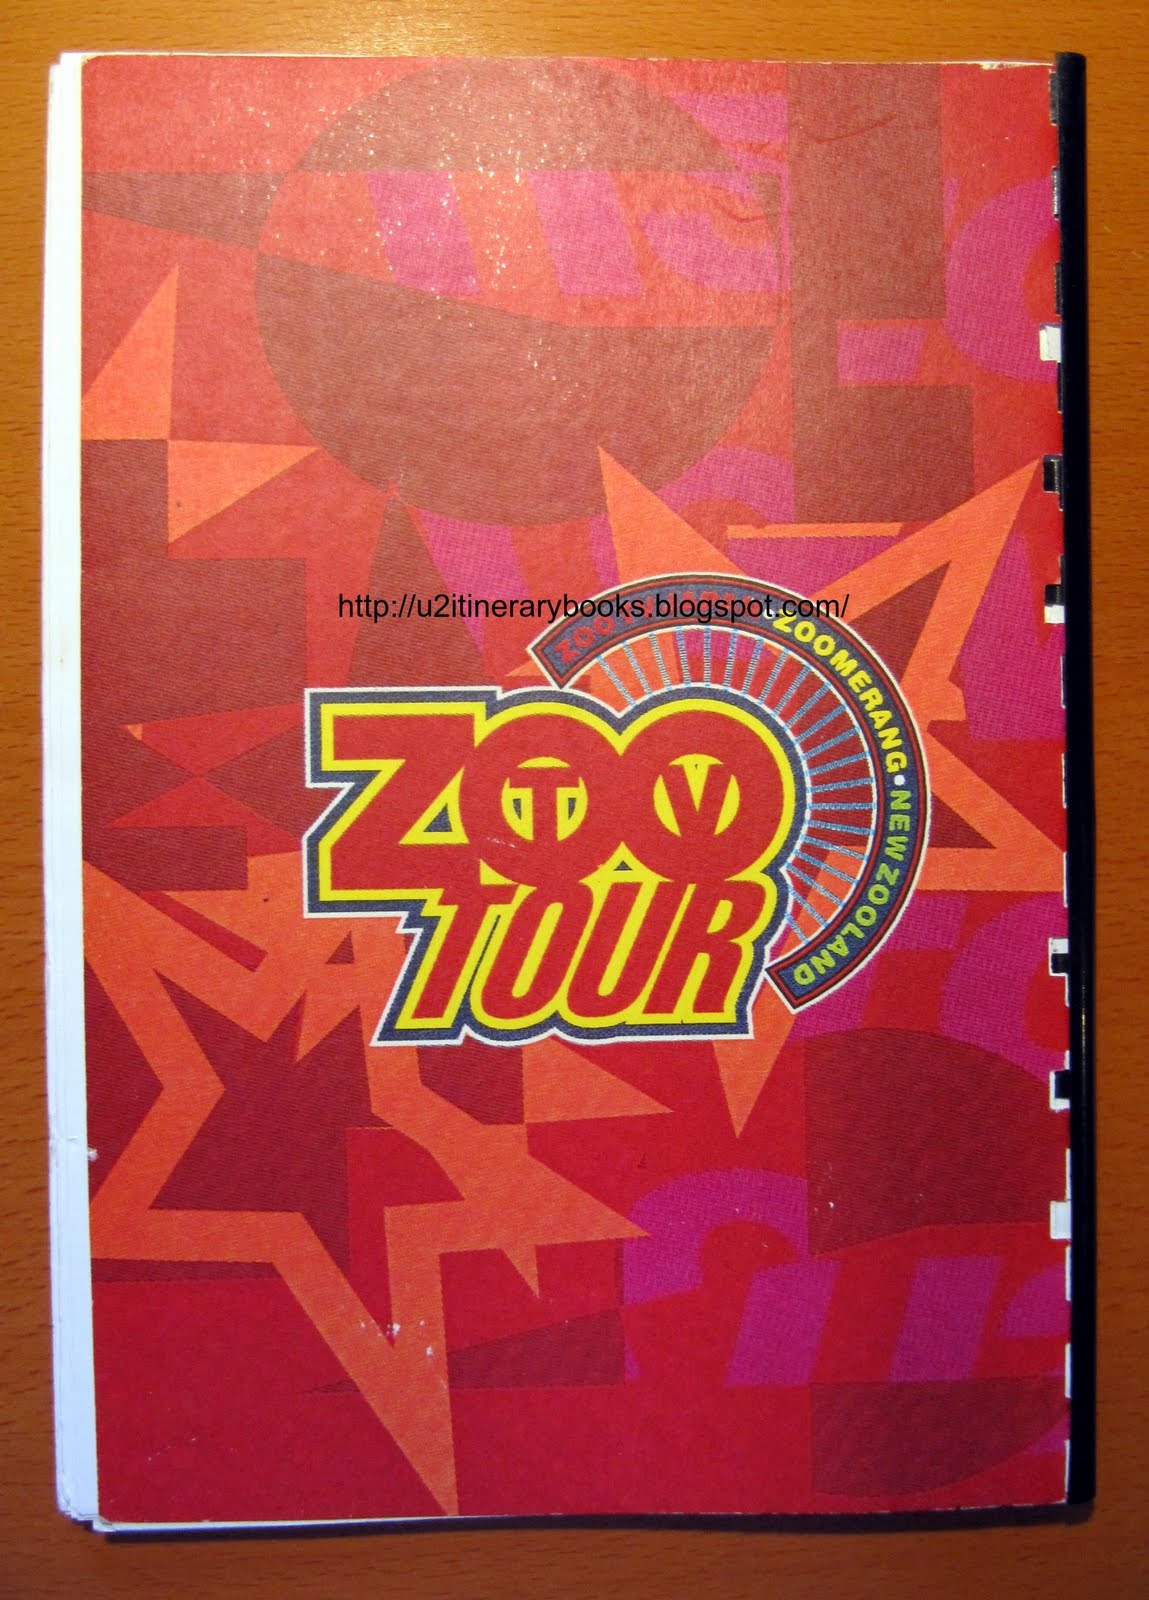 u2 zoo tv logo